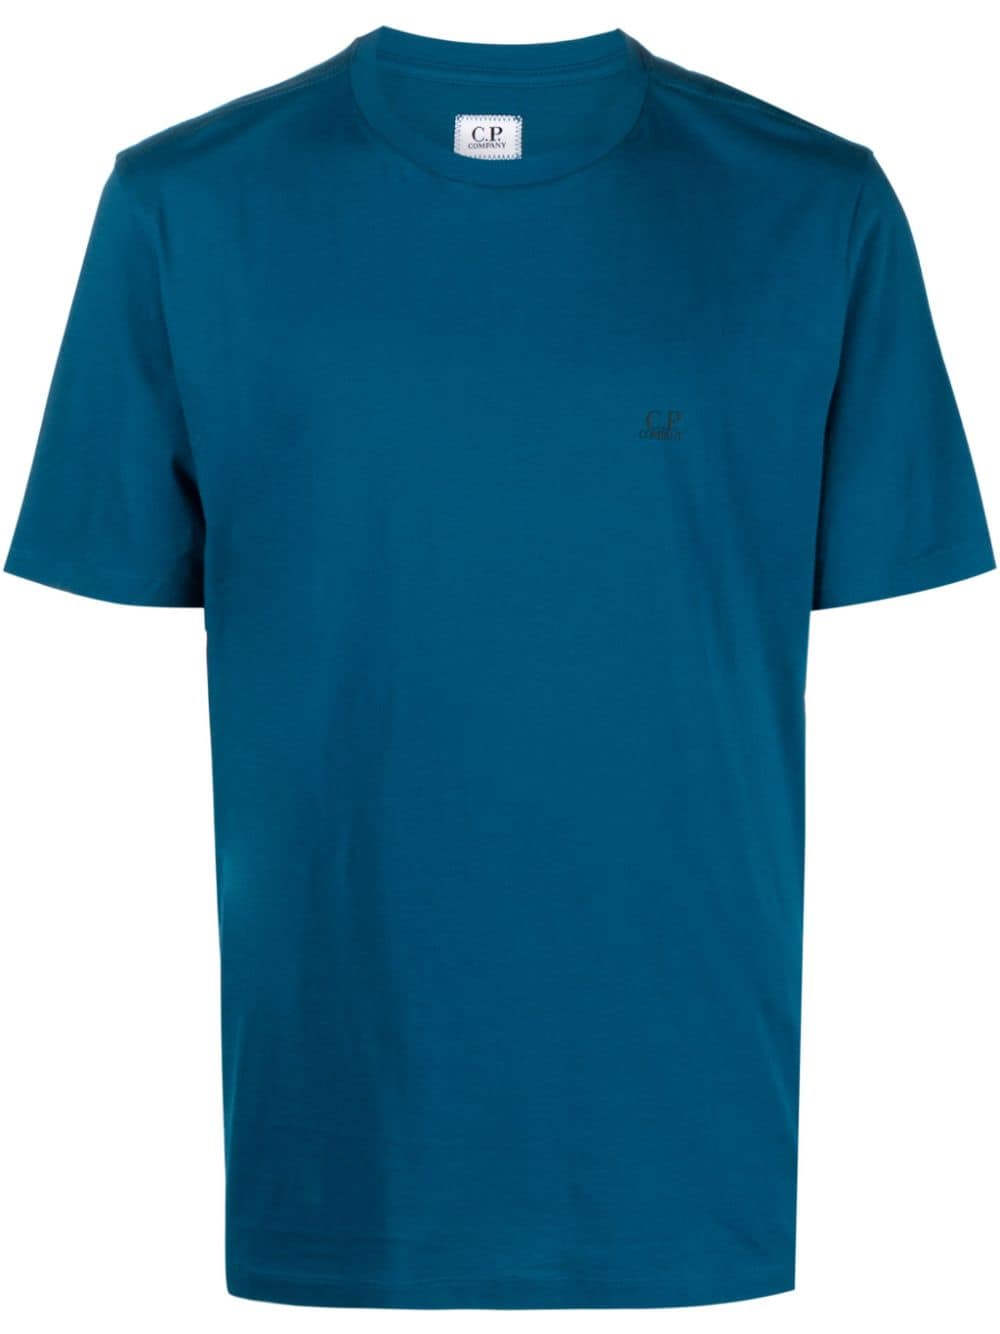 C.P. Company 30/1 Goggles-print cotton T-shirt - Blue von C.P. Company